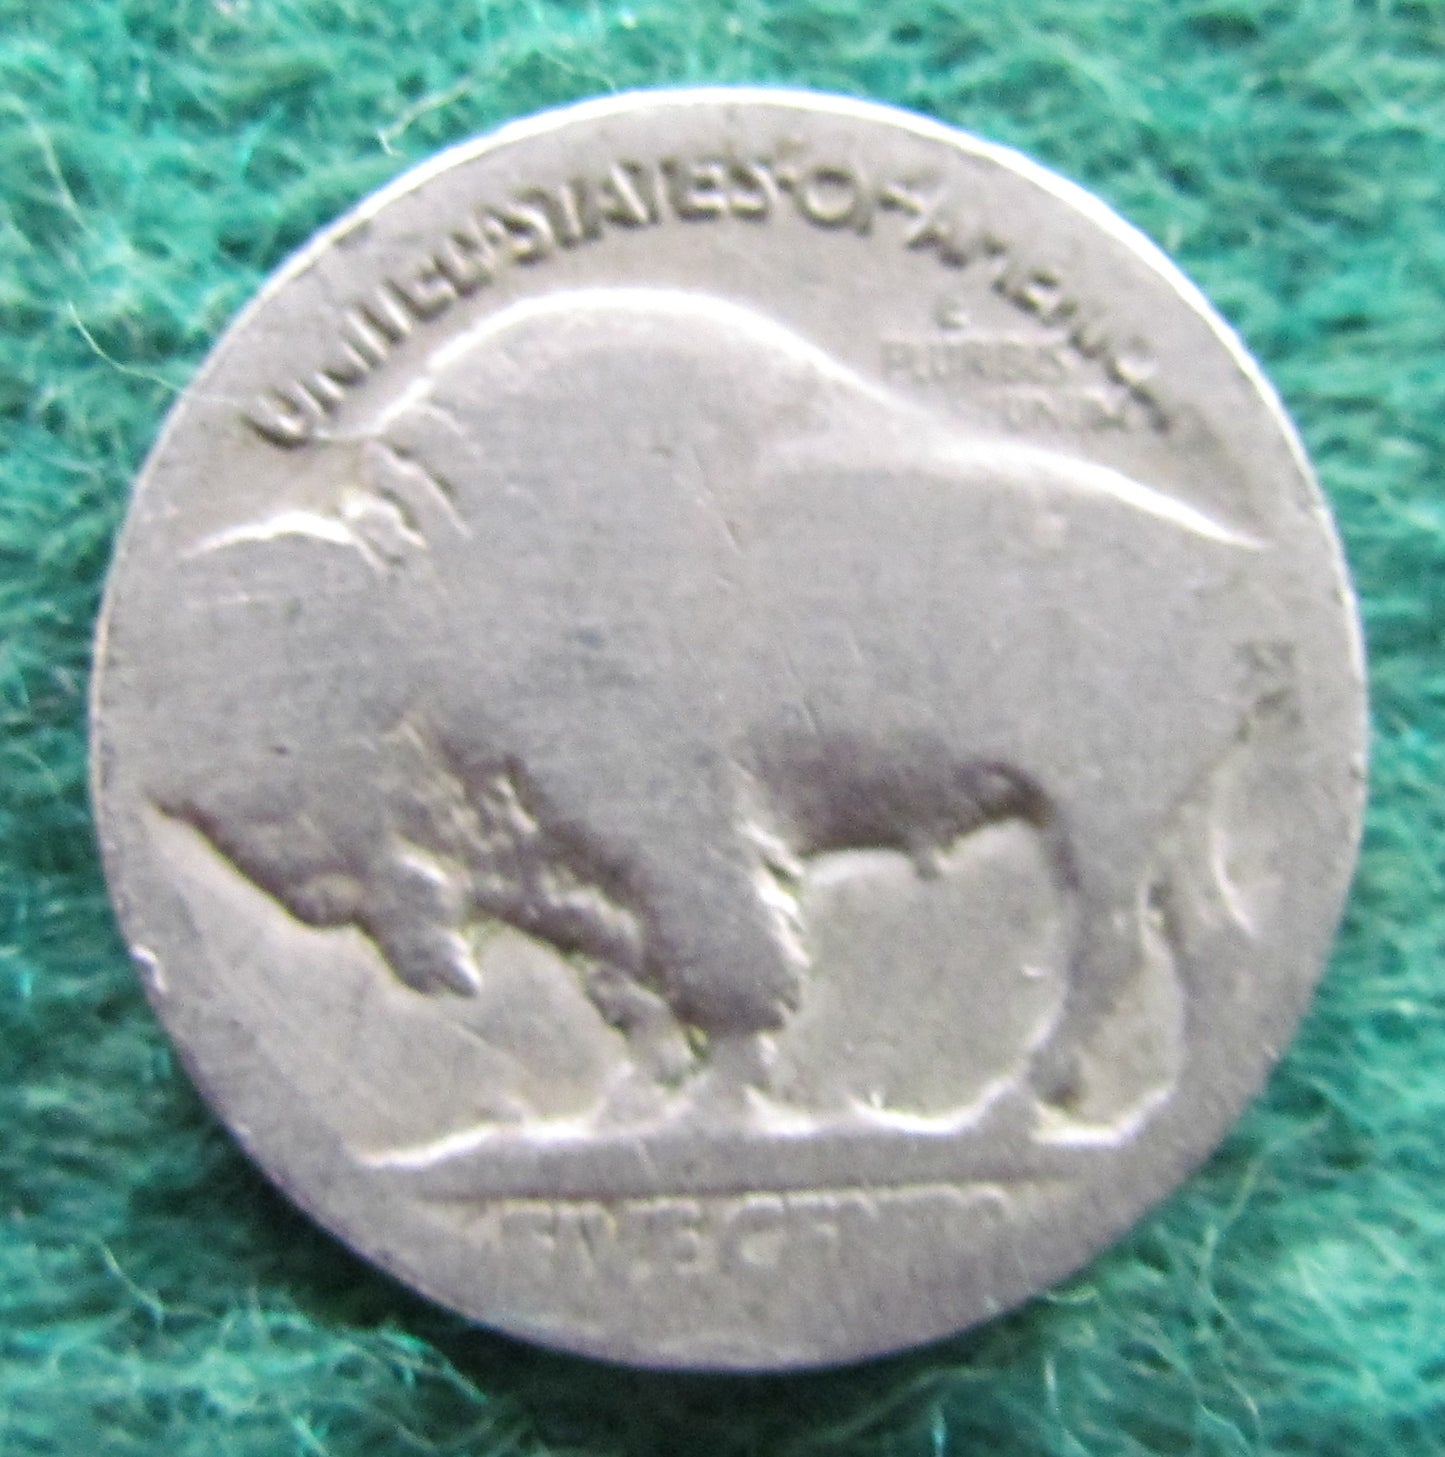 USA American 1913 - 1938 Buffalo Nickel Coin - Circulated Illegible Date